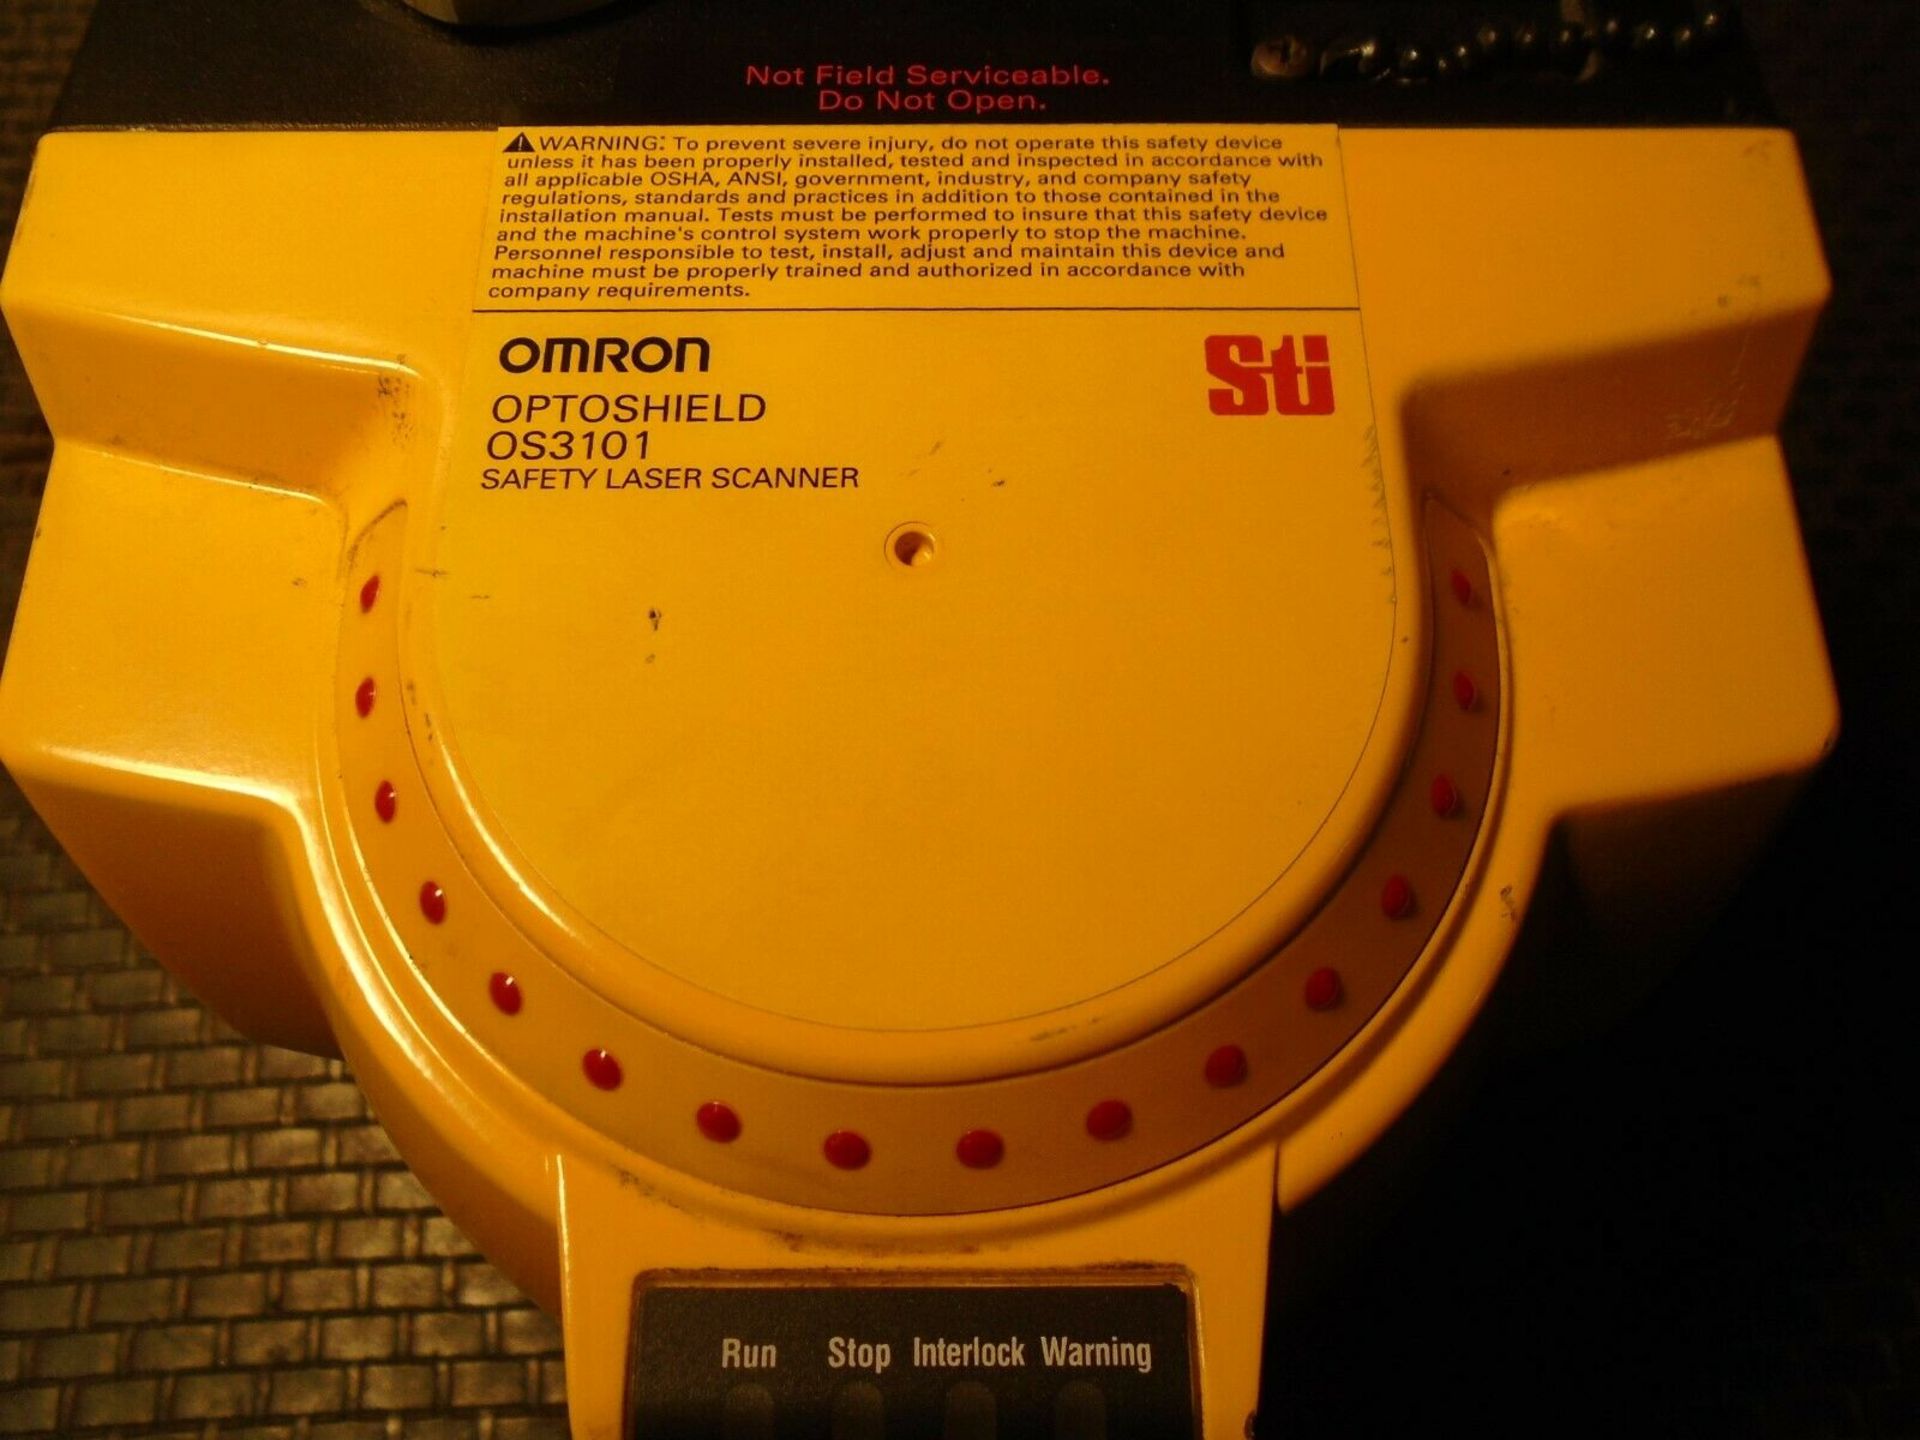 Omron Optoshield 053101 Safety Laser Scanner - Image 5 of 5